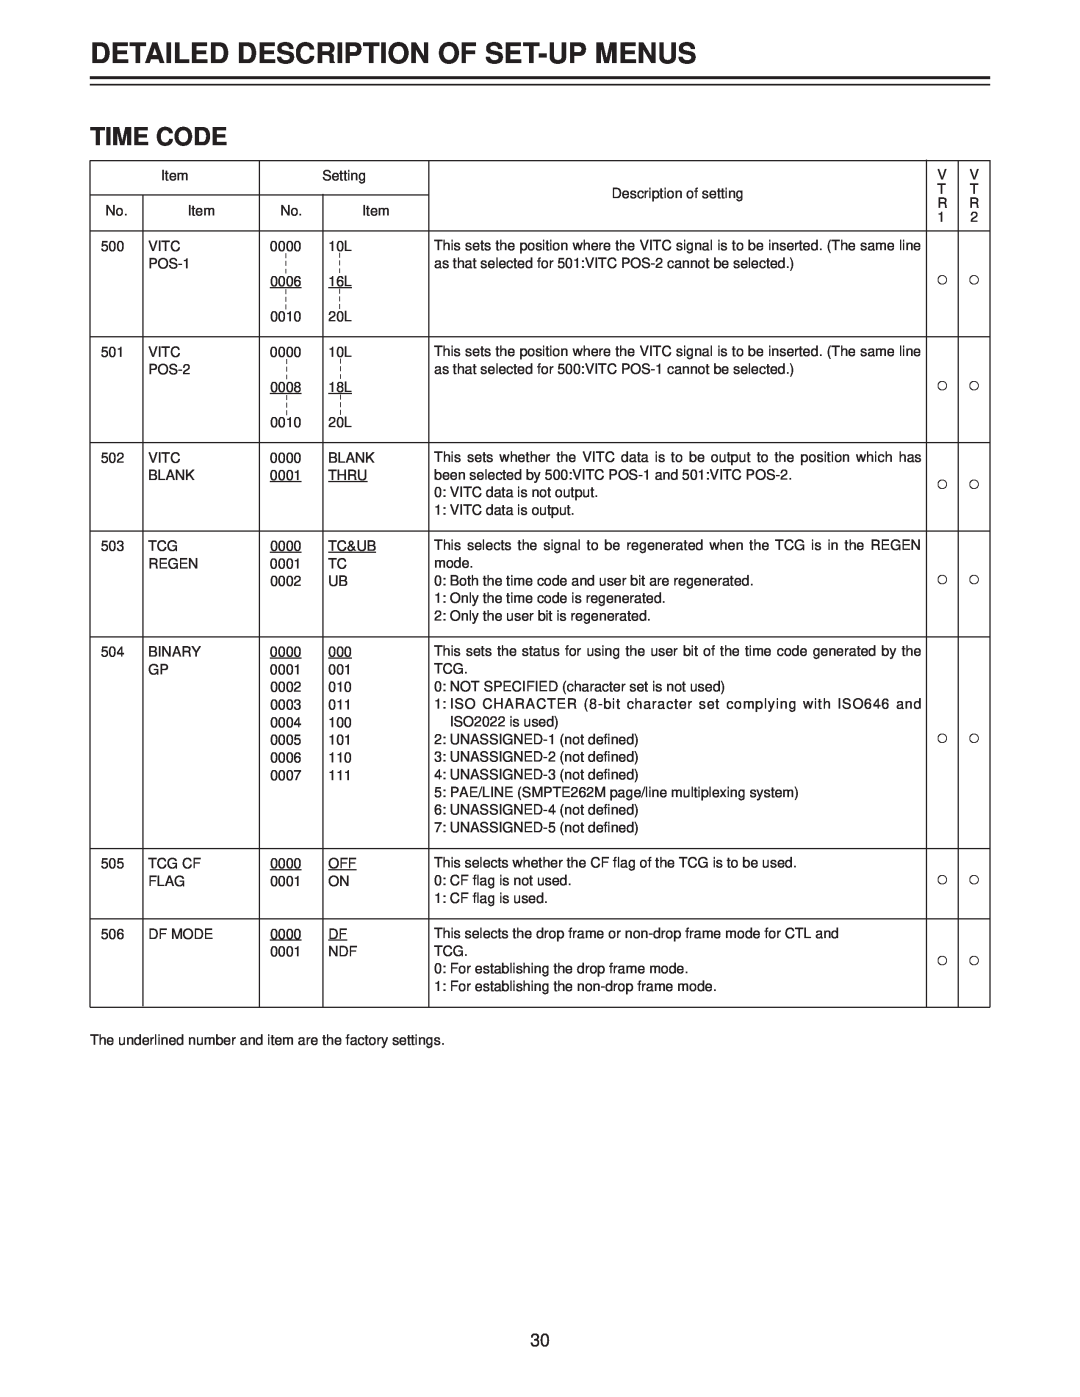 Panasonic AJ-LT85P manual Time Code, Detailed Description Of Set-Up Menus 